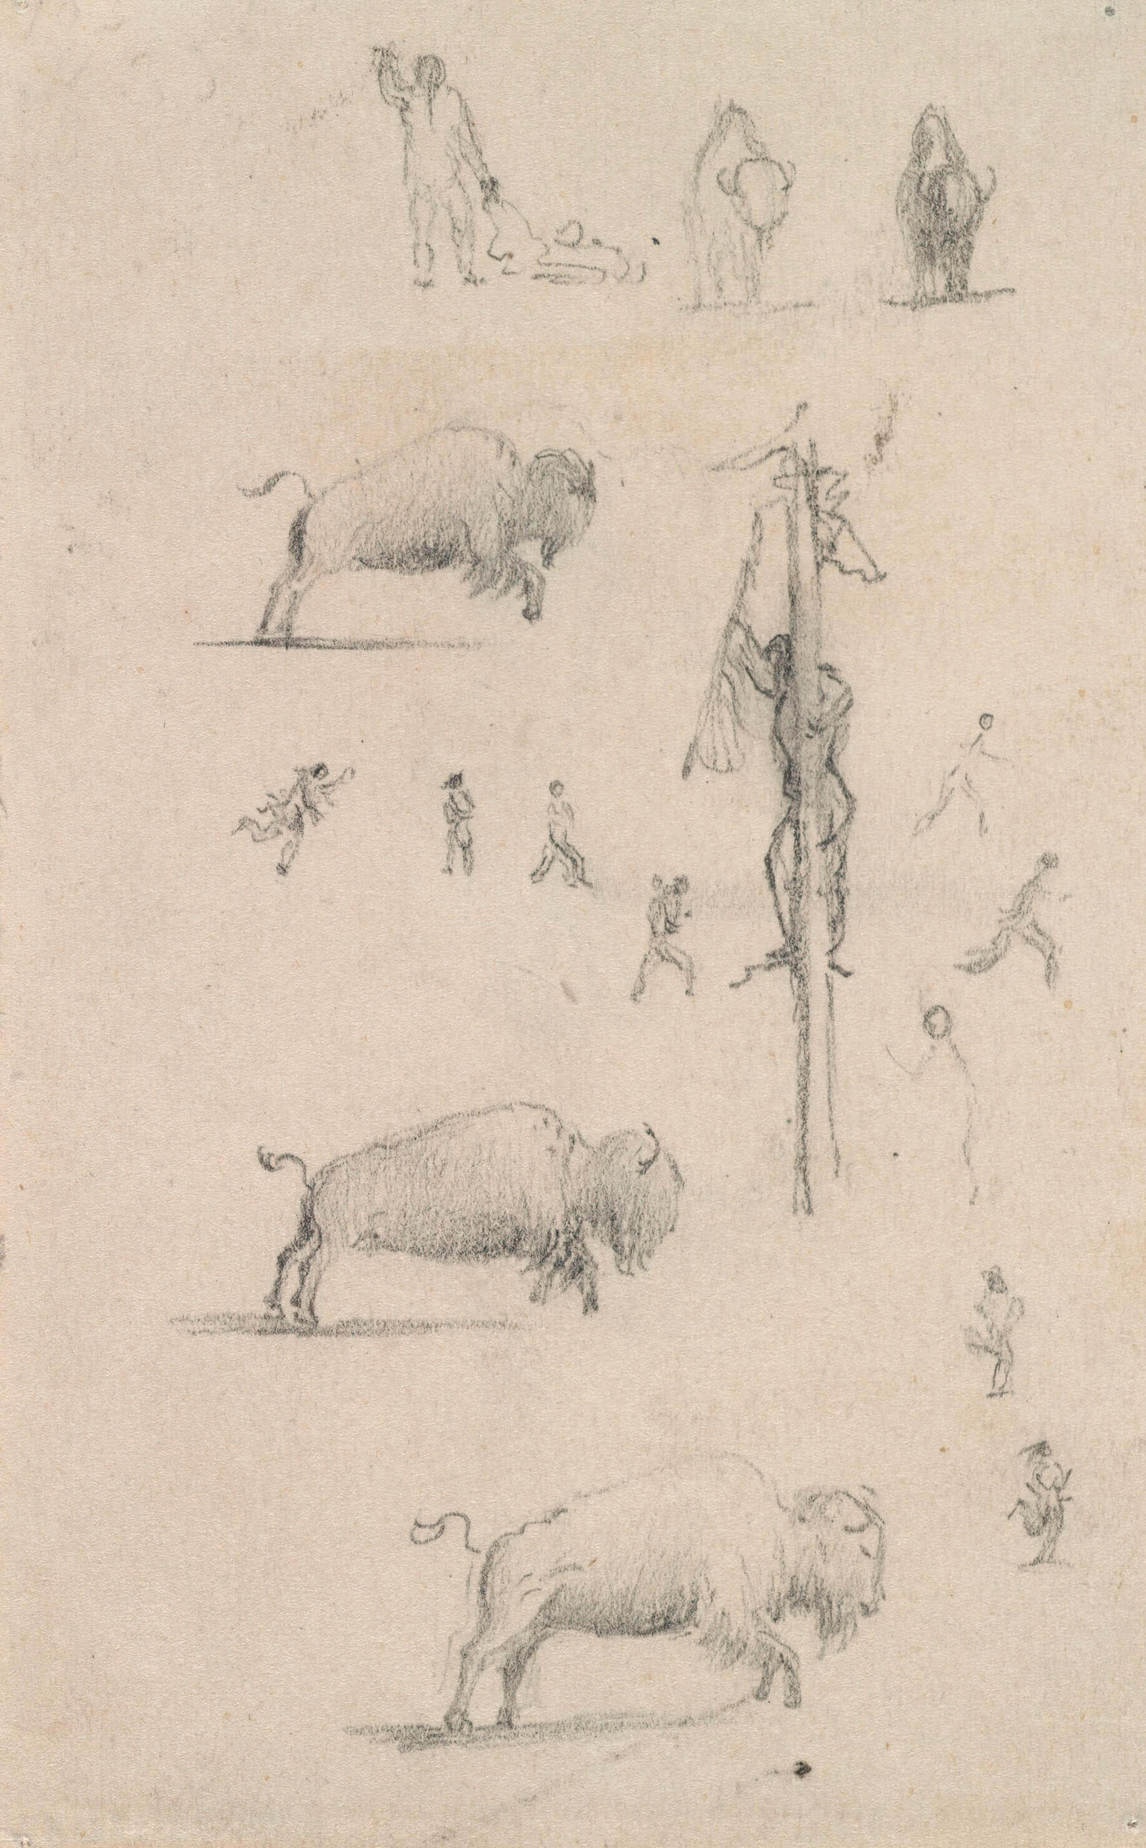 Art Canada Institute, Paul Kane, Buffalo Hunt Studies, 1846